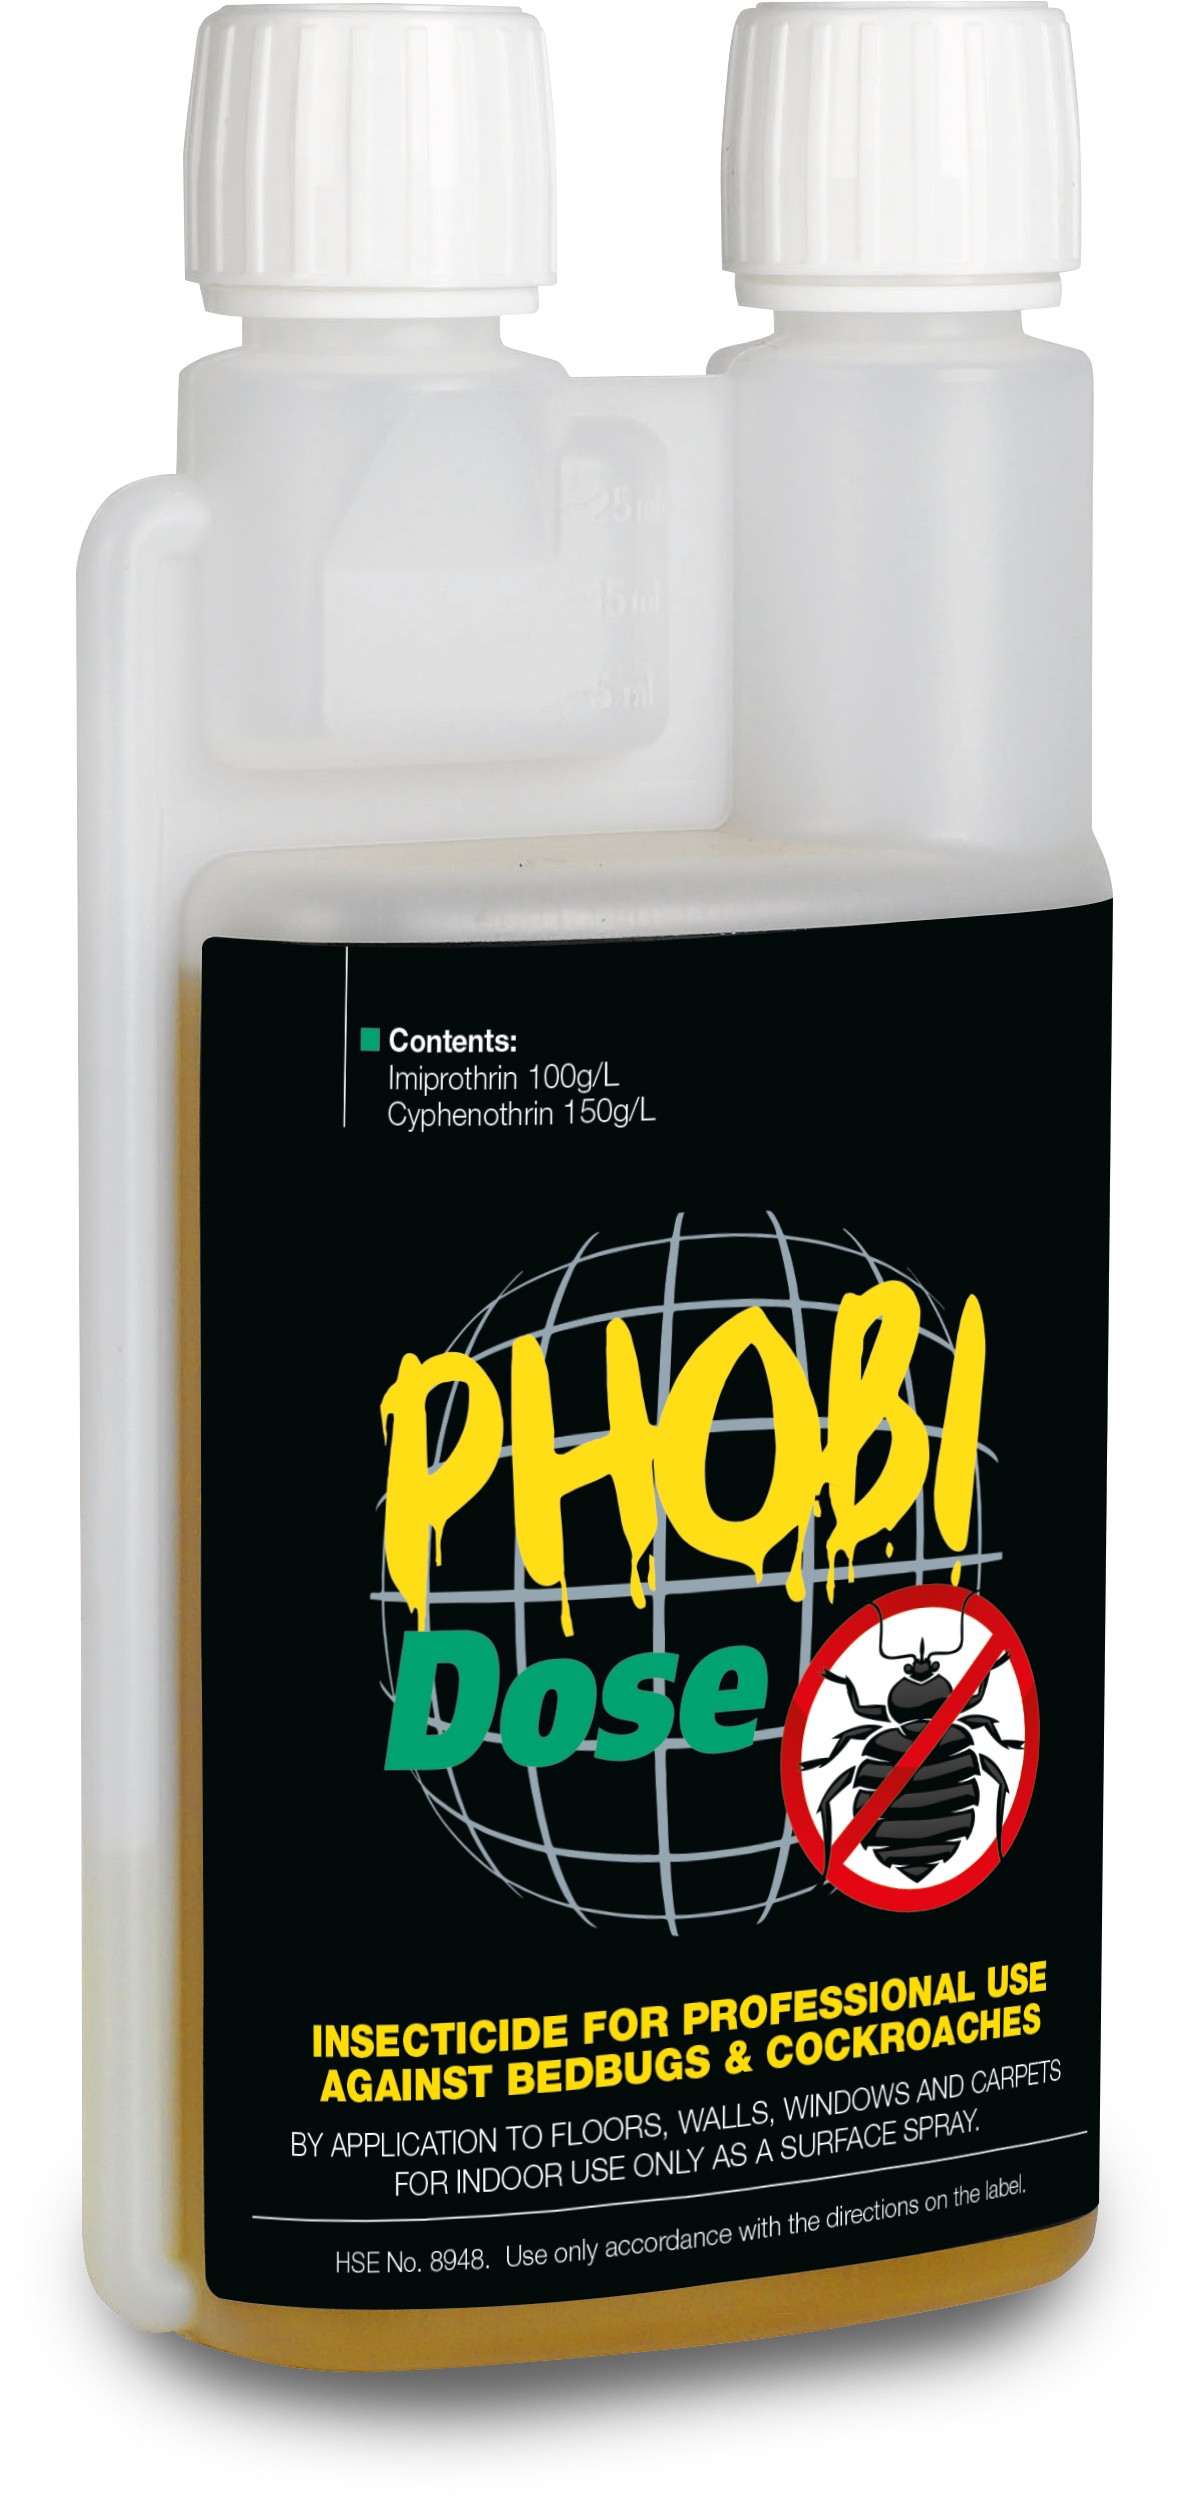 Phobi Dose + 250ml